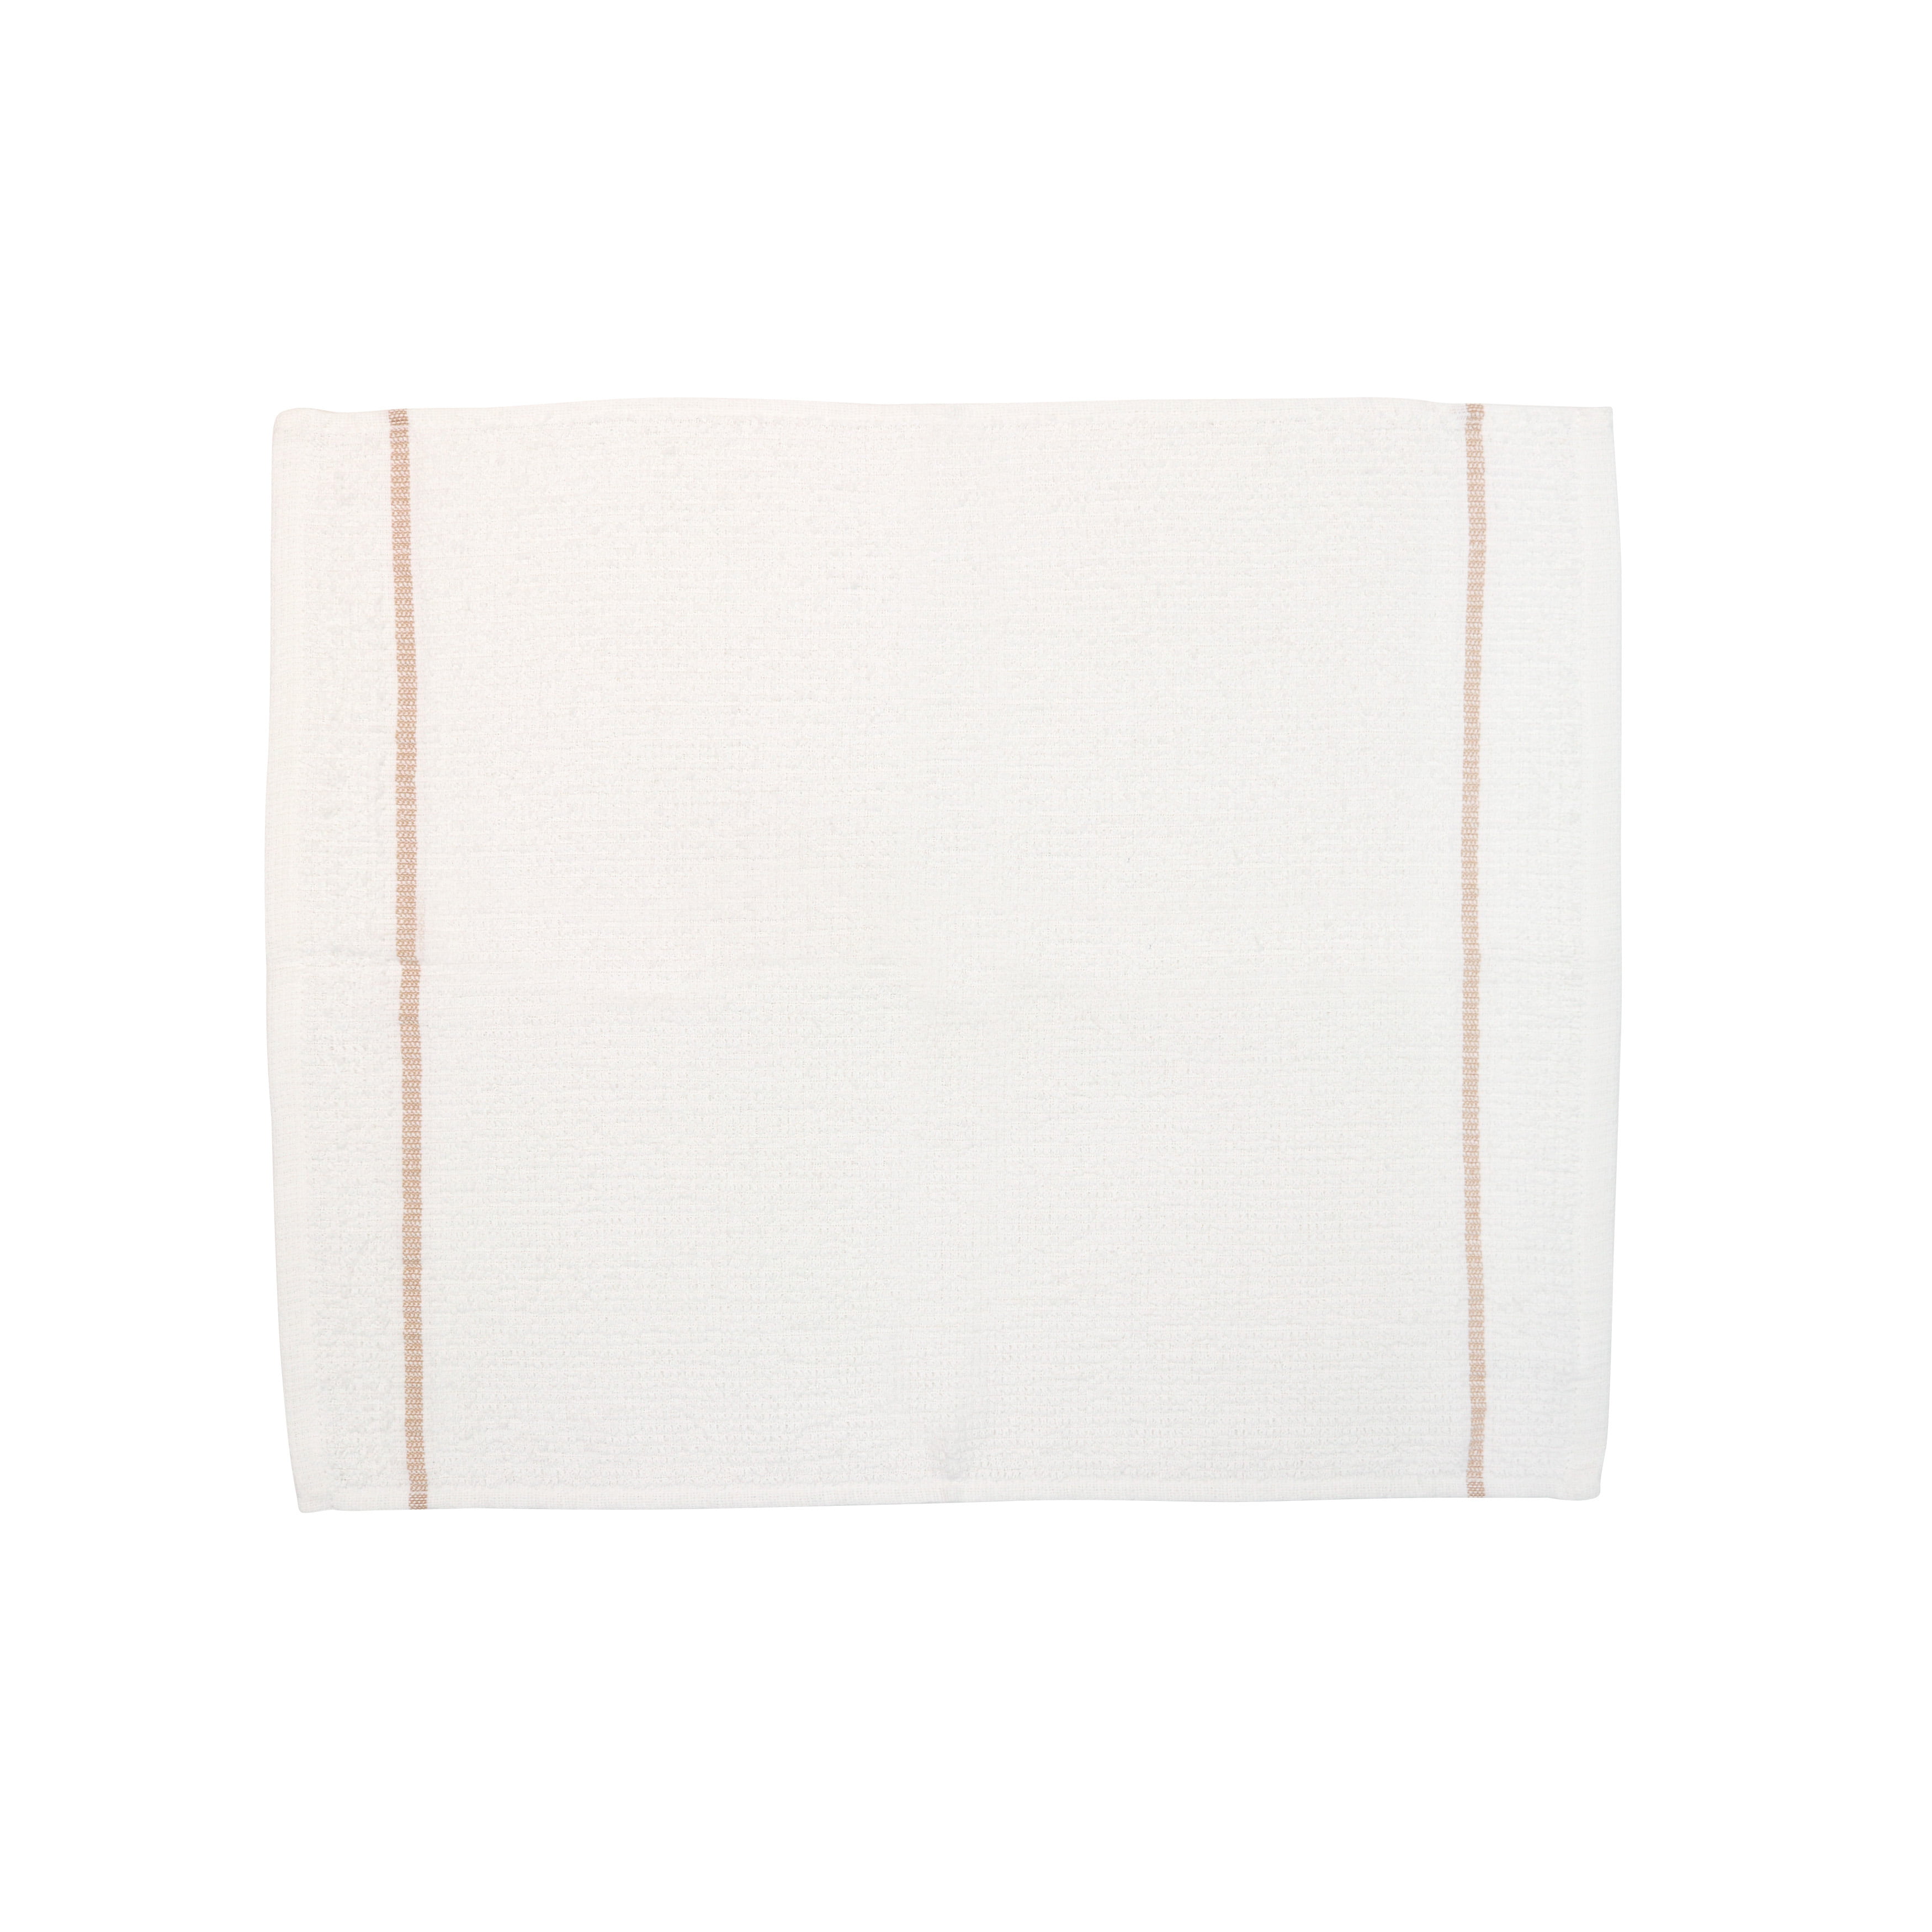 Bar Towels Archives - Tipton Linen